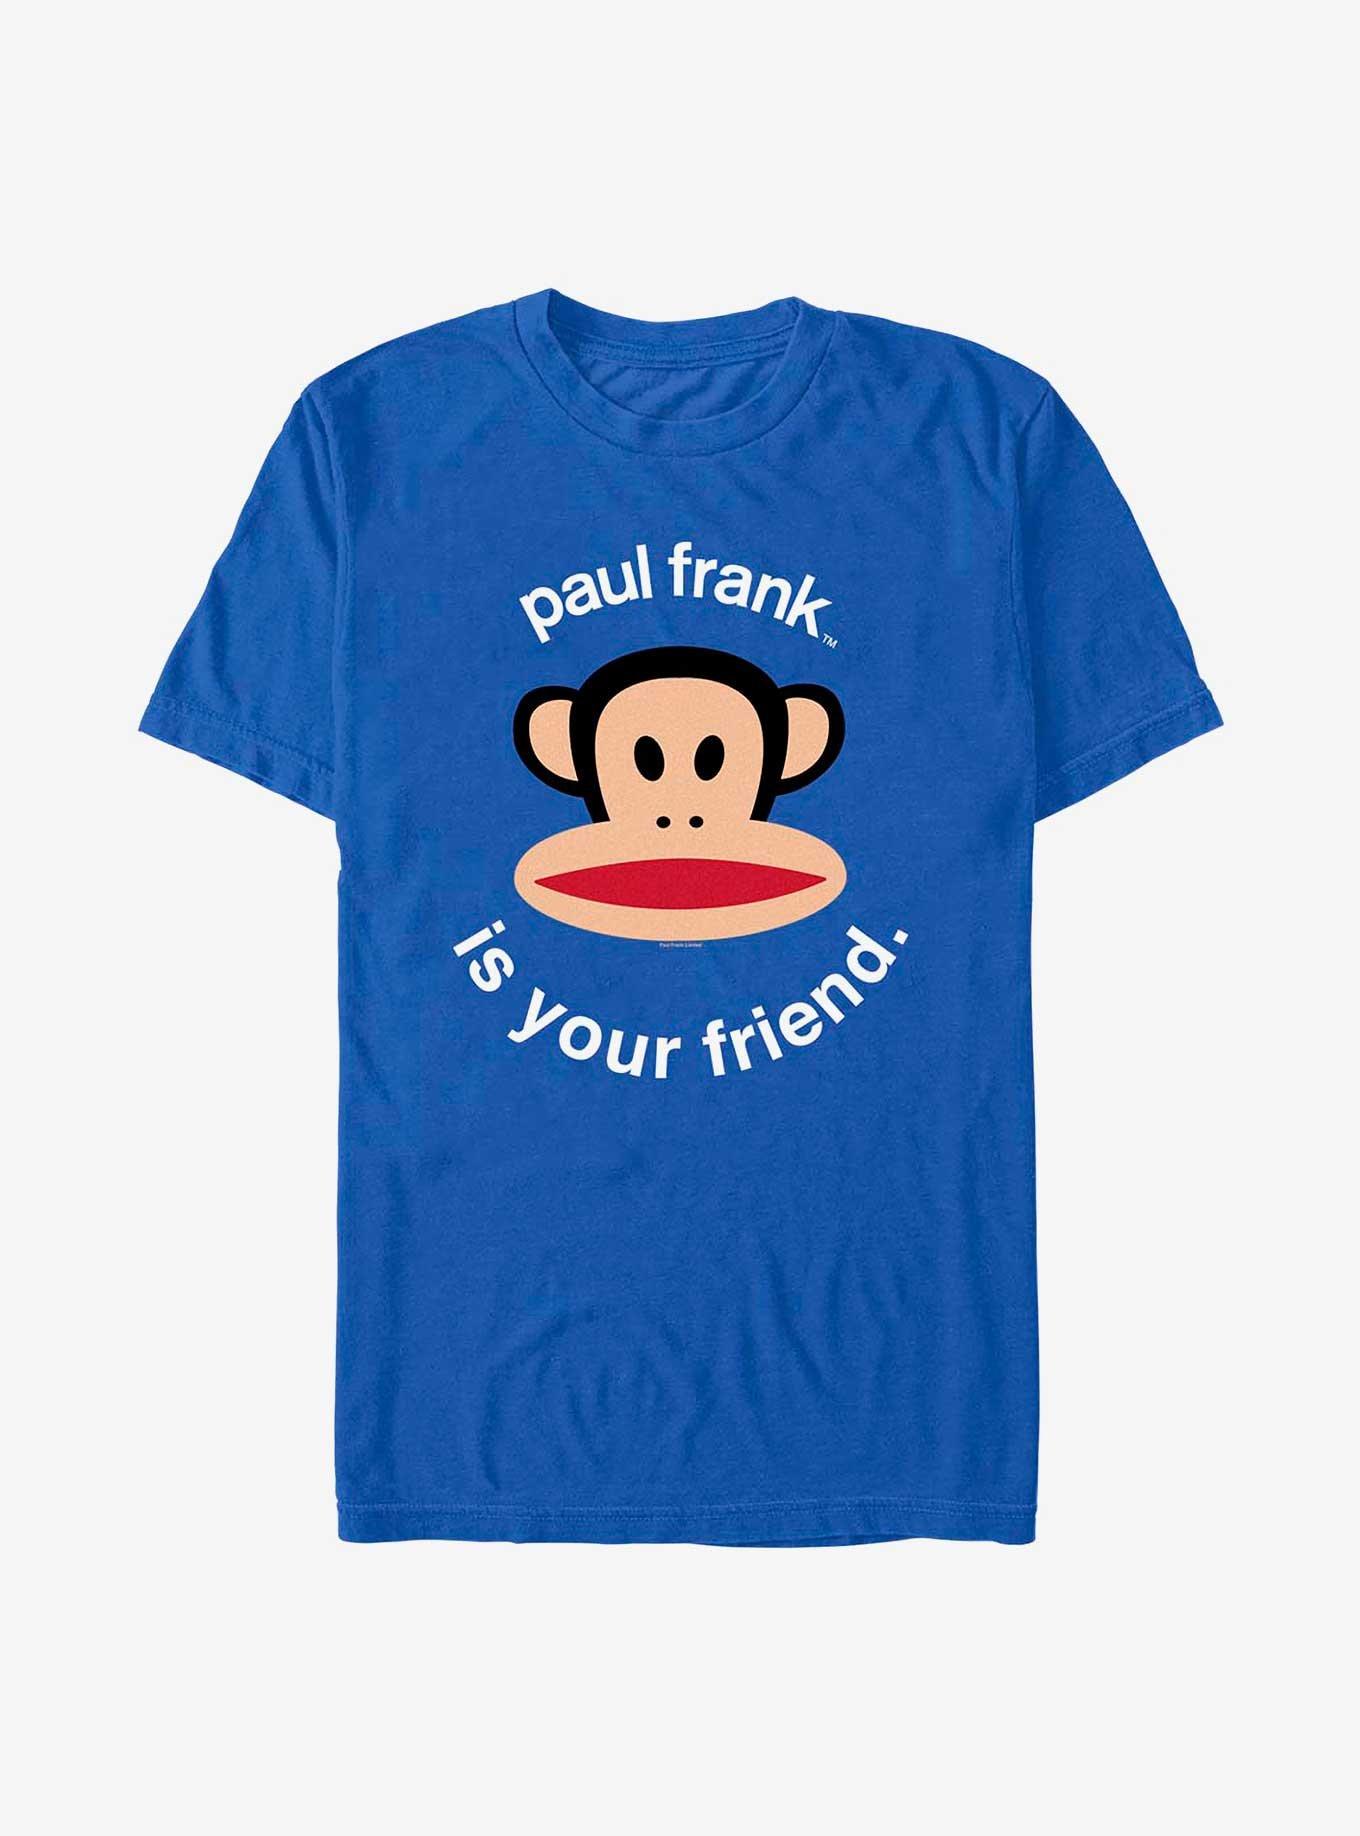 2T Paul Frank Girls T Shirt Pool Blue Monkey Graphic 